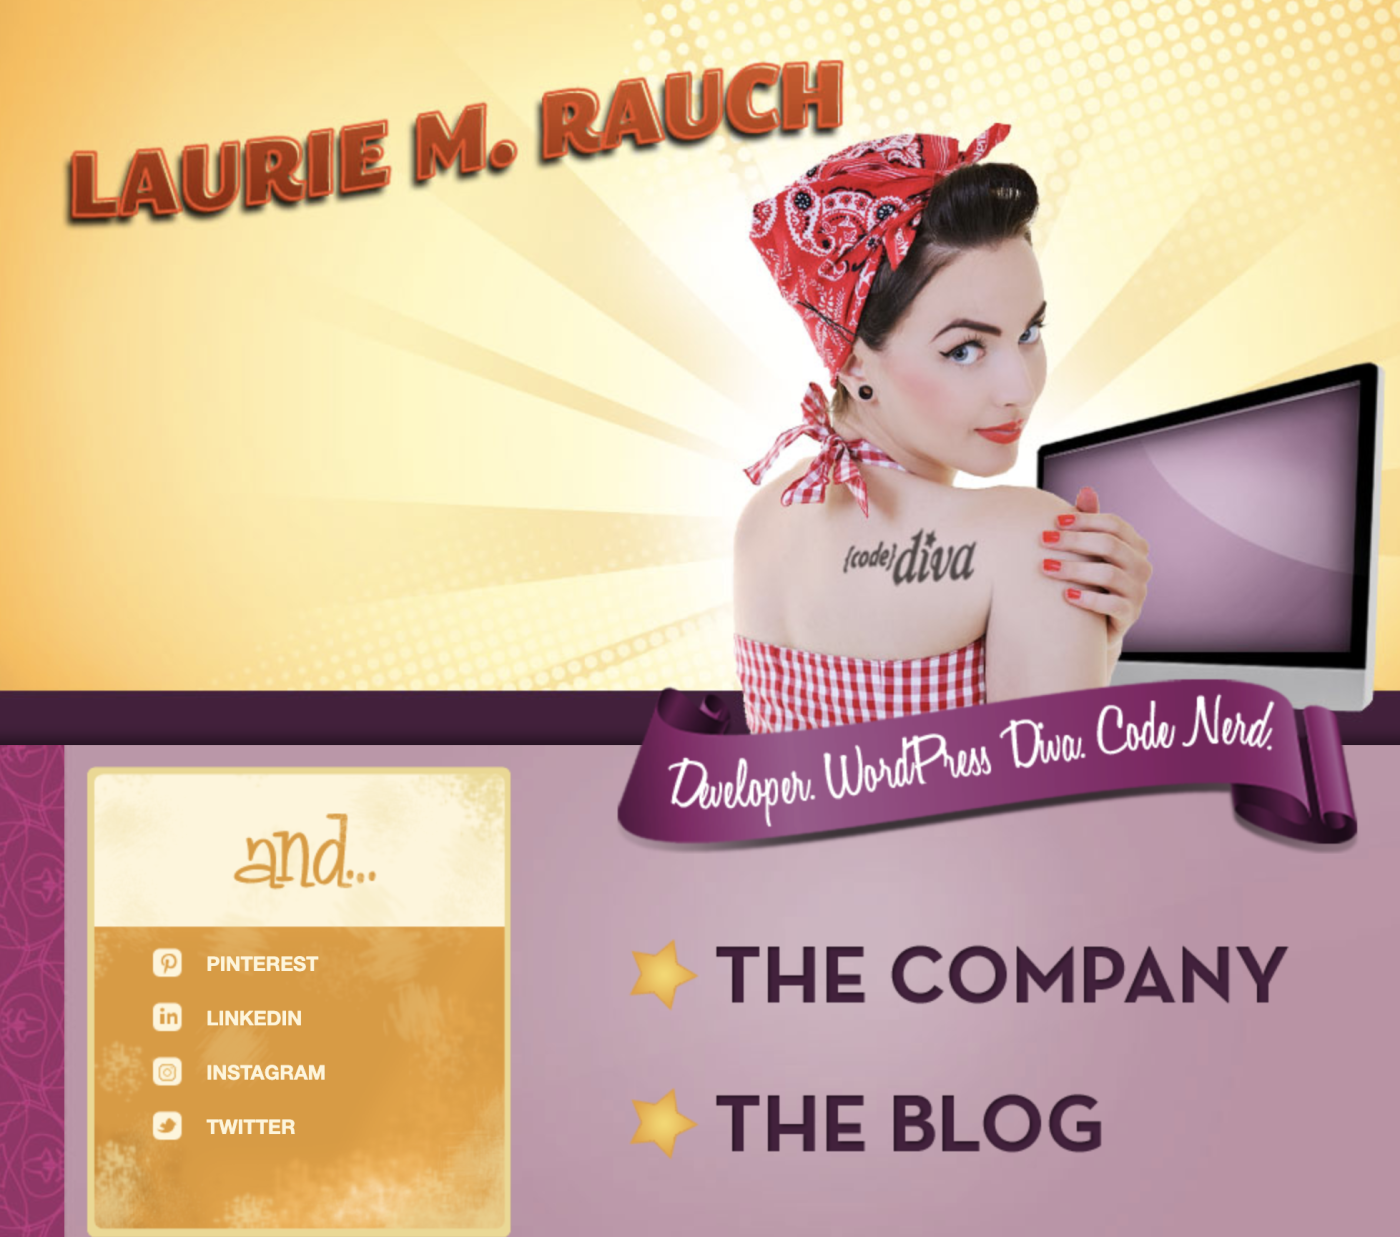 Laurie's website